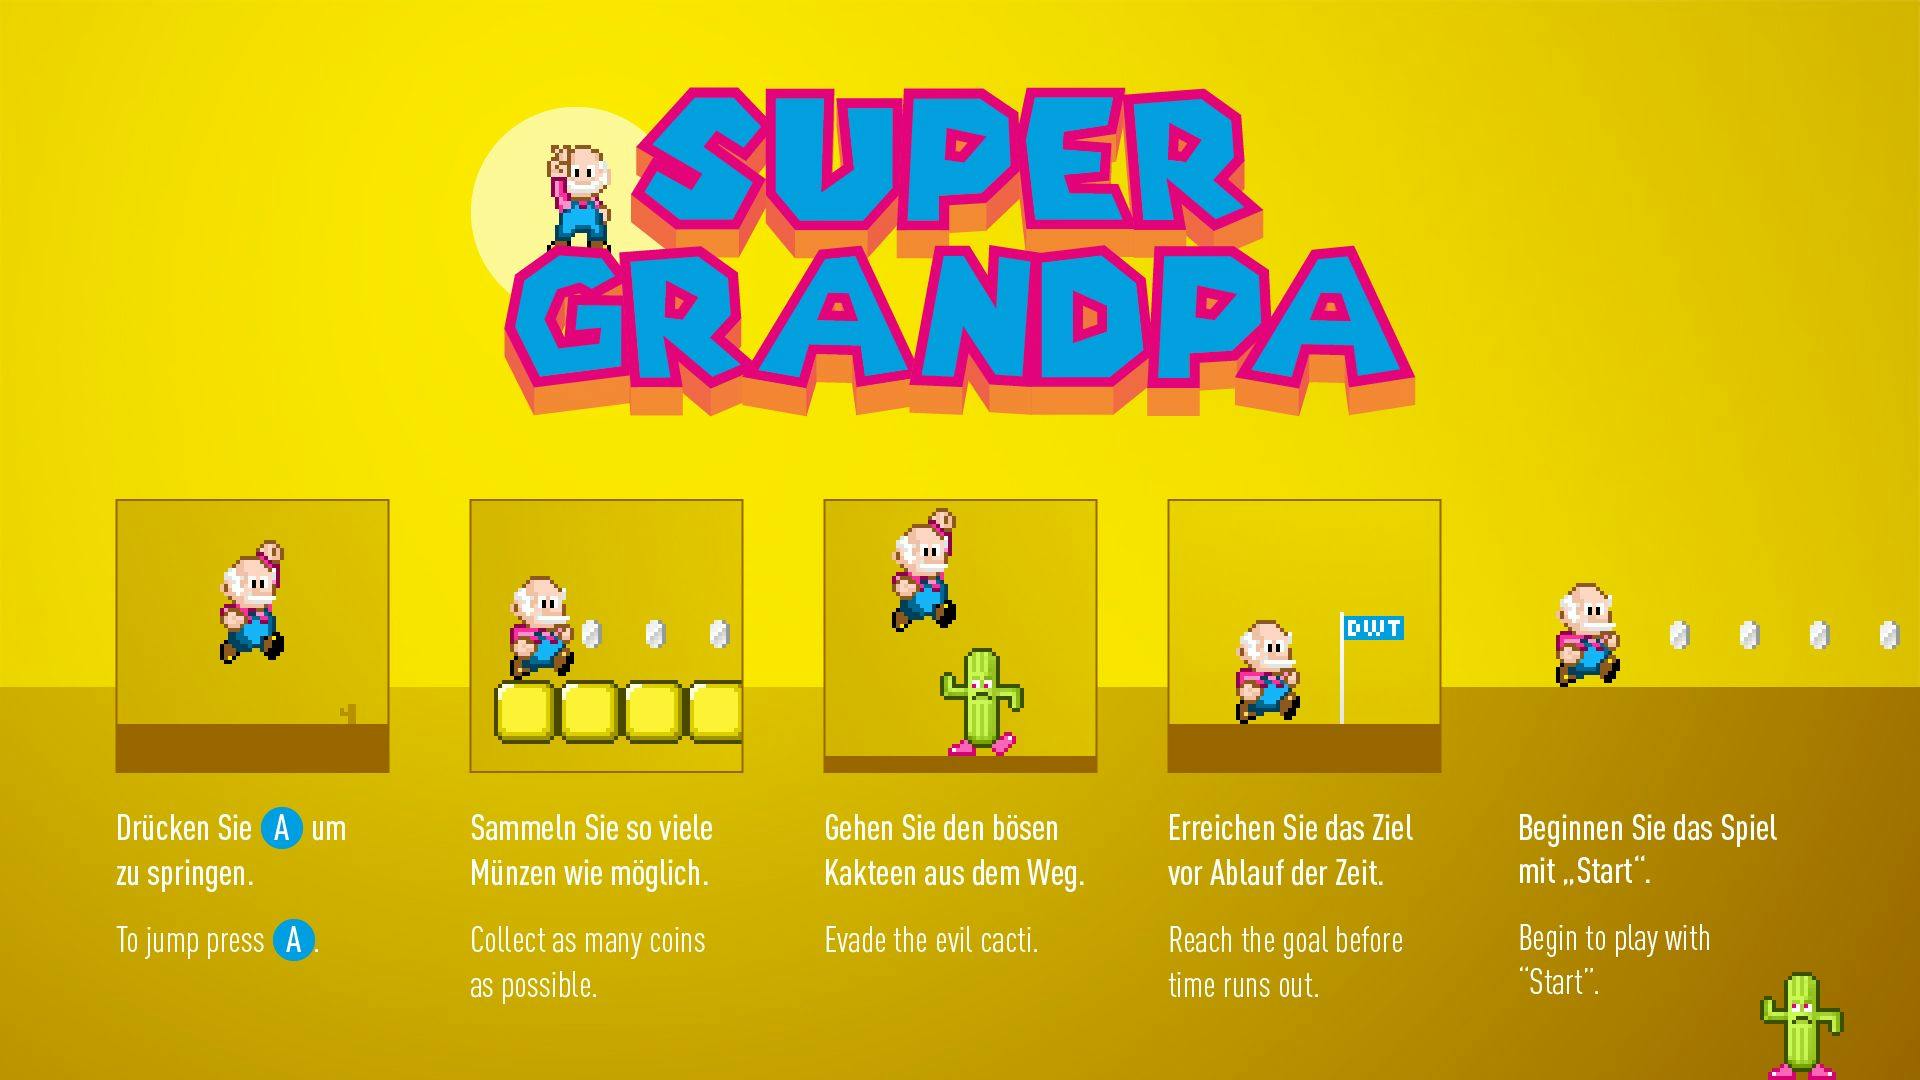 Interface of the game "Super Grandpa"